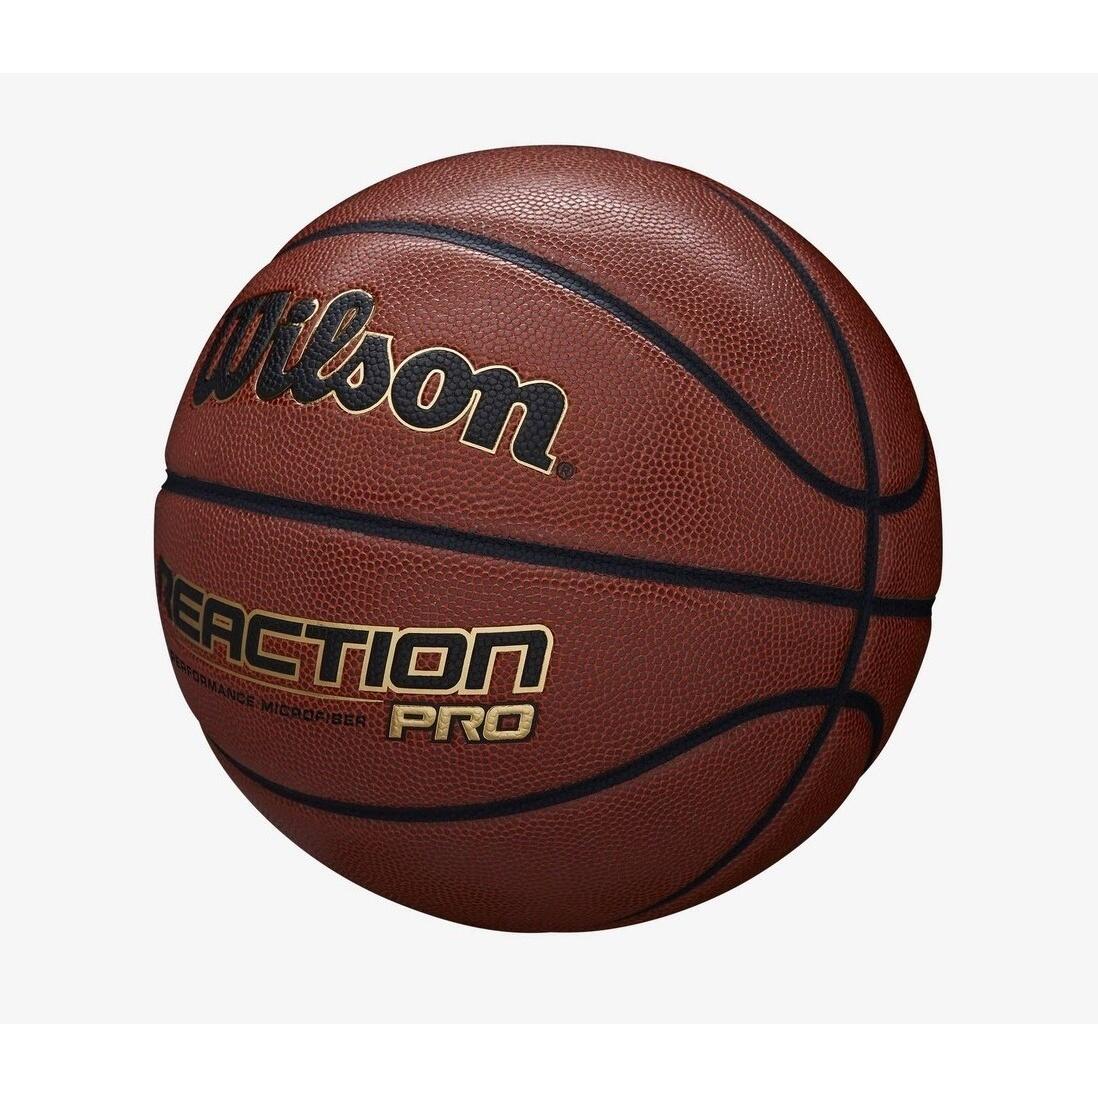 Reaction Pro Basketball (Tan) 2/2